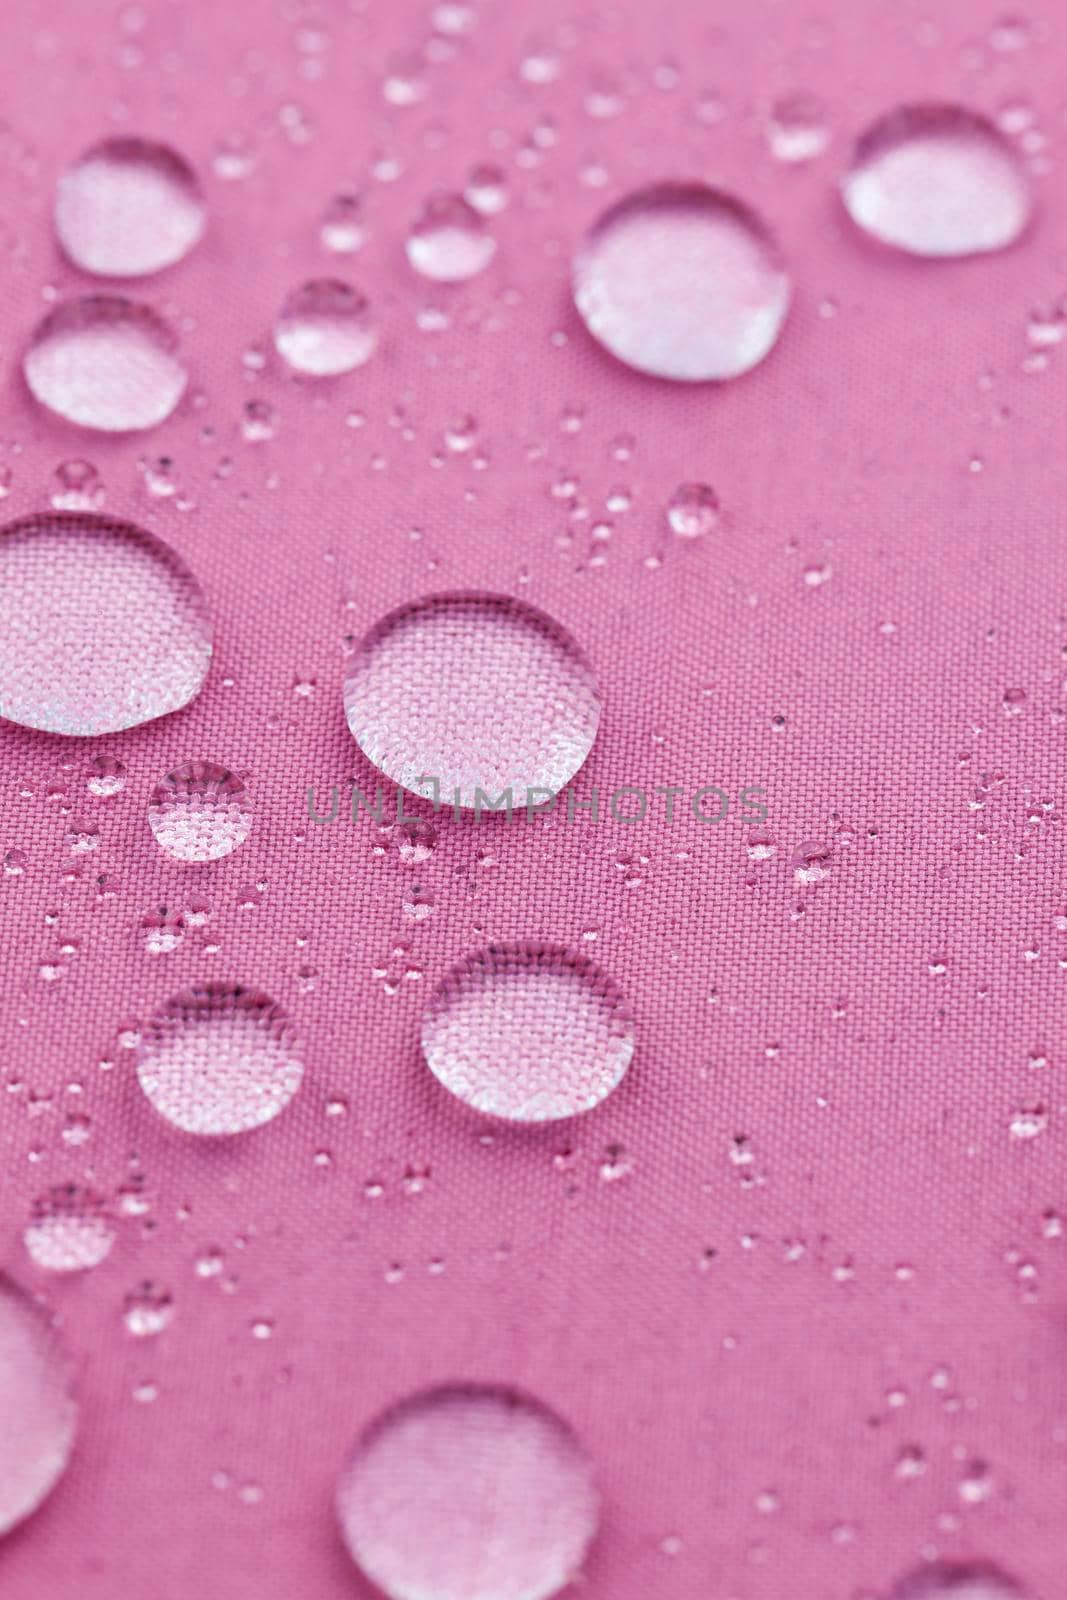 Drops of water by avq